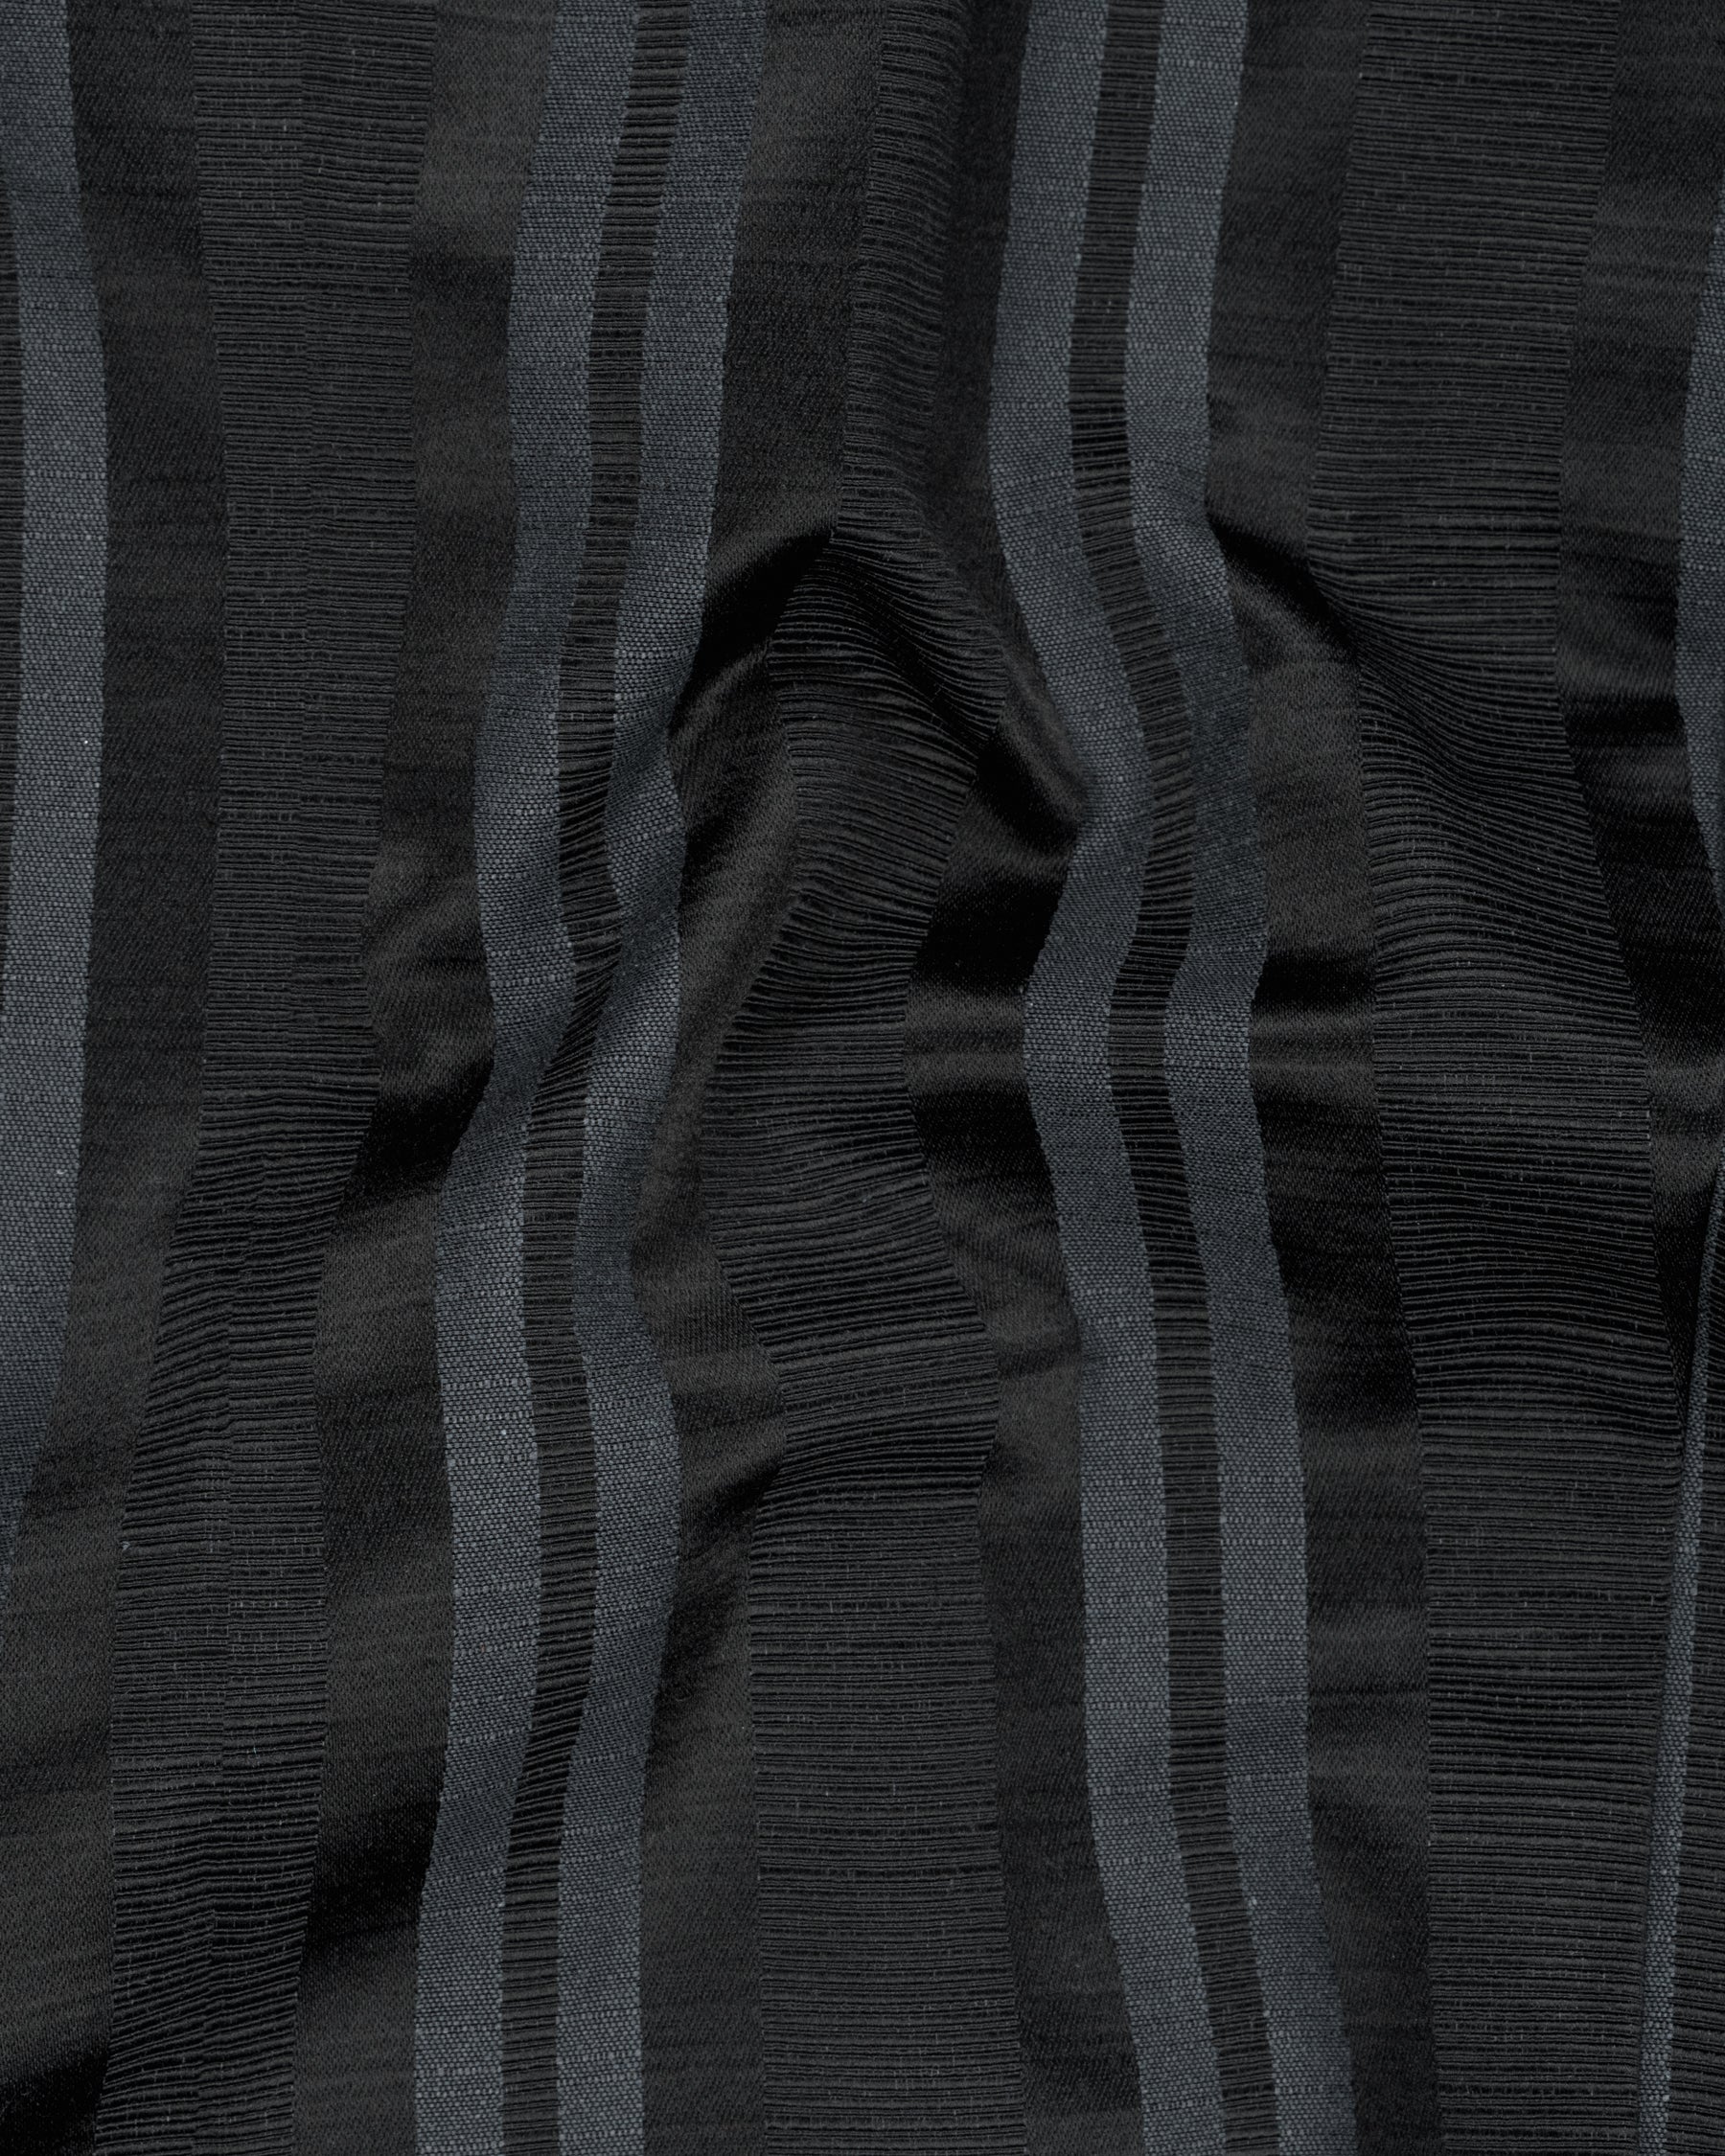 Jade Black with Arsenic Gray Striped Jacquard Textured Premium Cotton Designer Blazer